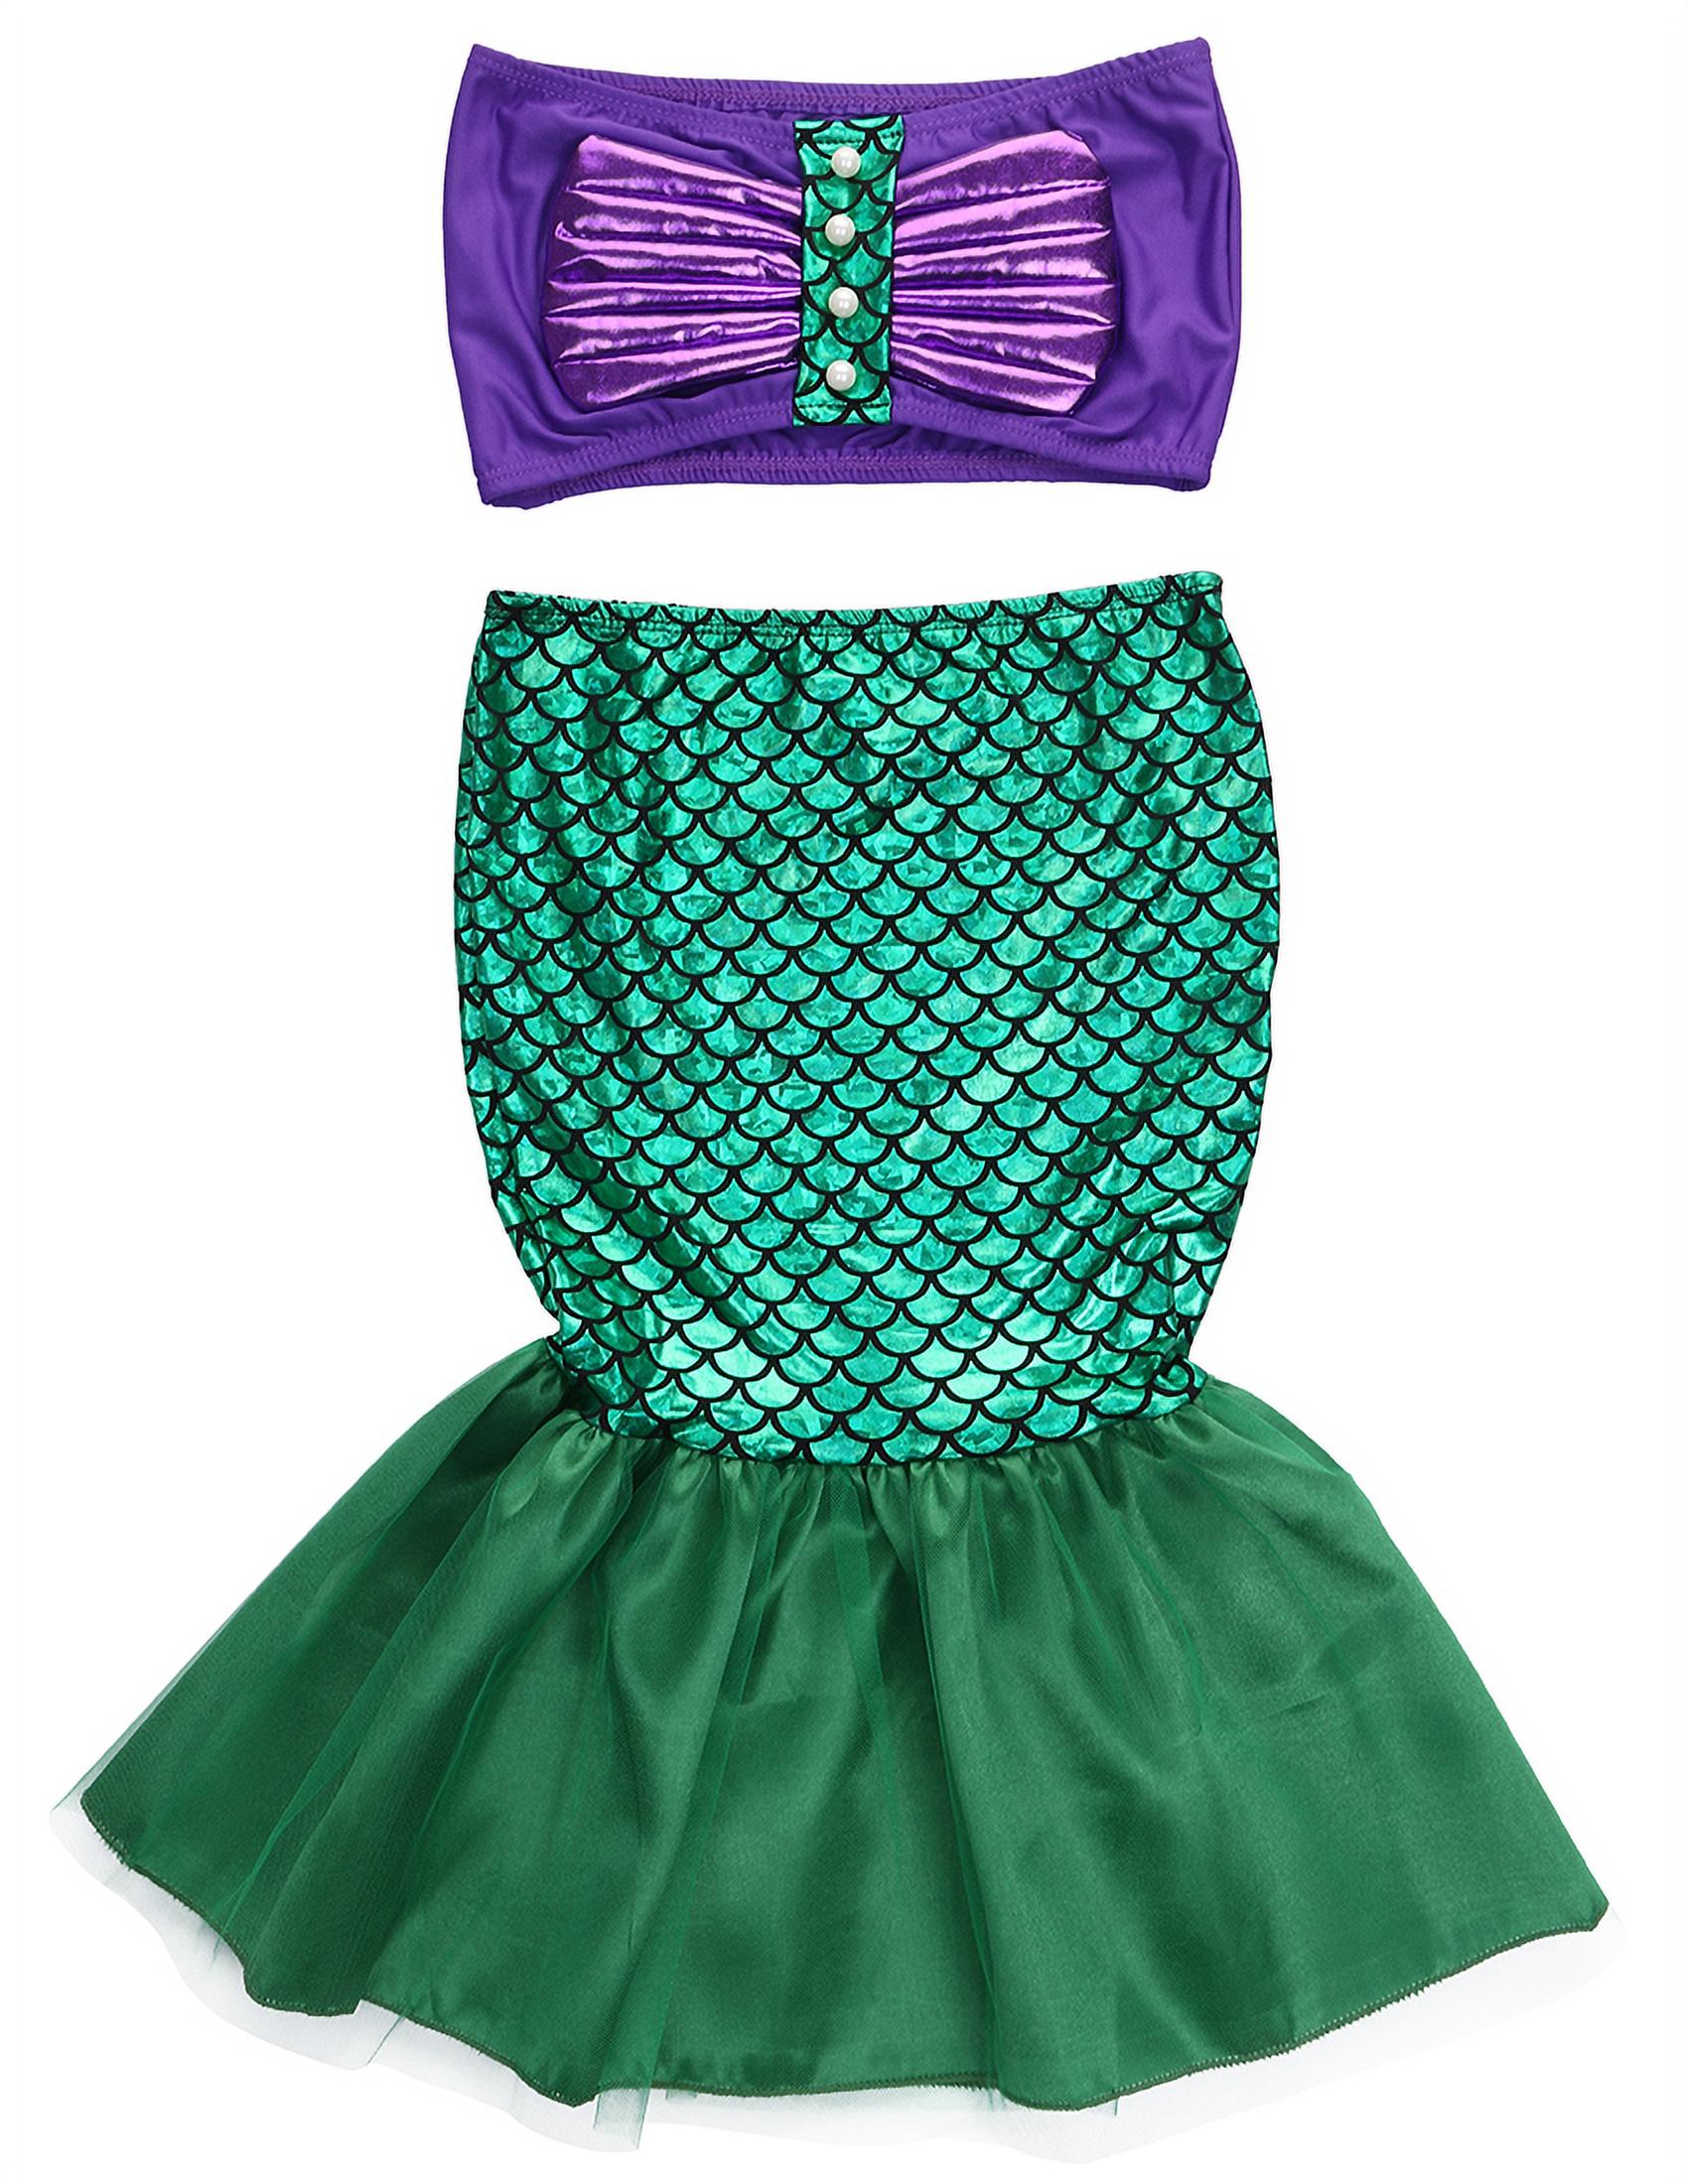 dennis vickery recommends Mermaid Short Skirt Costume